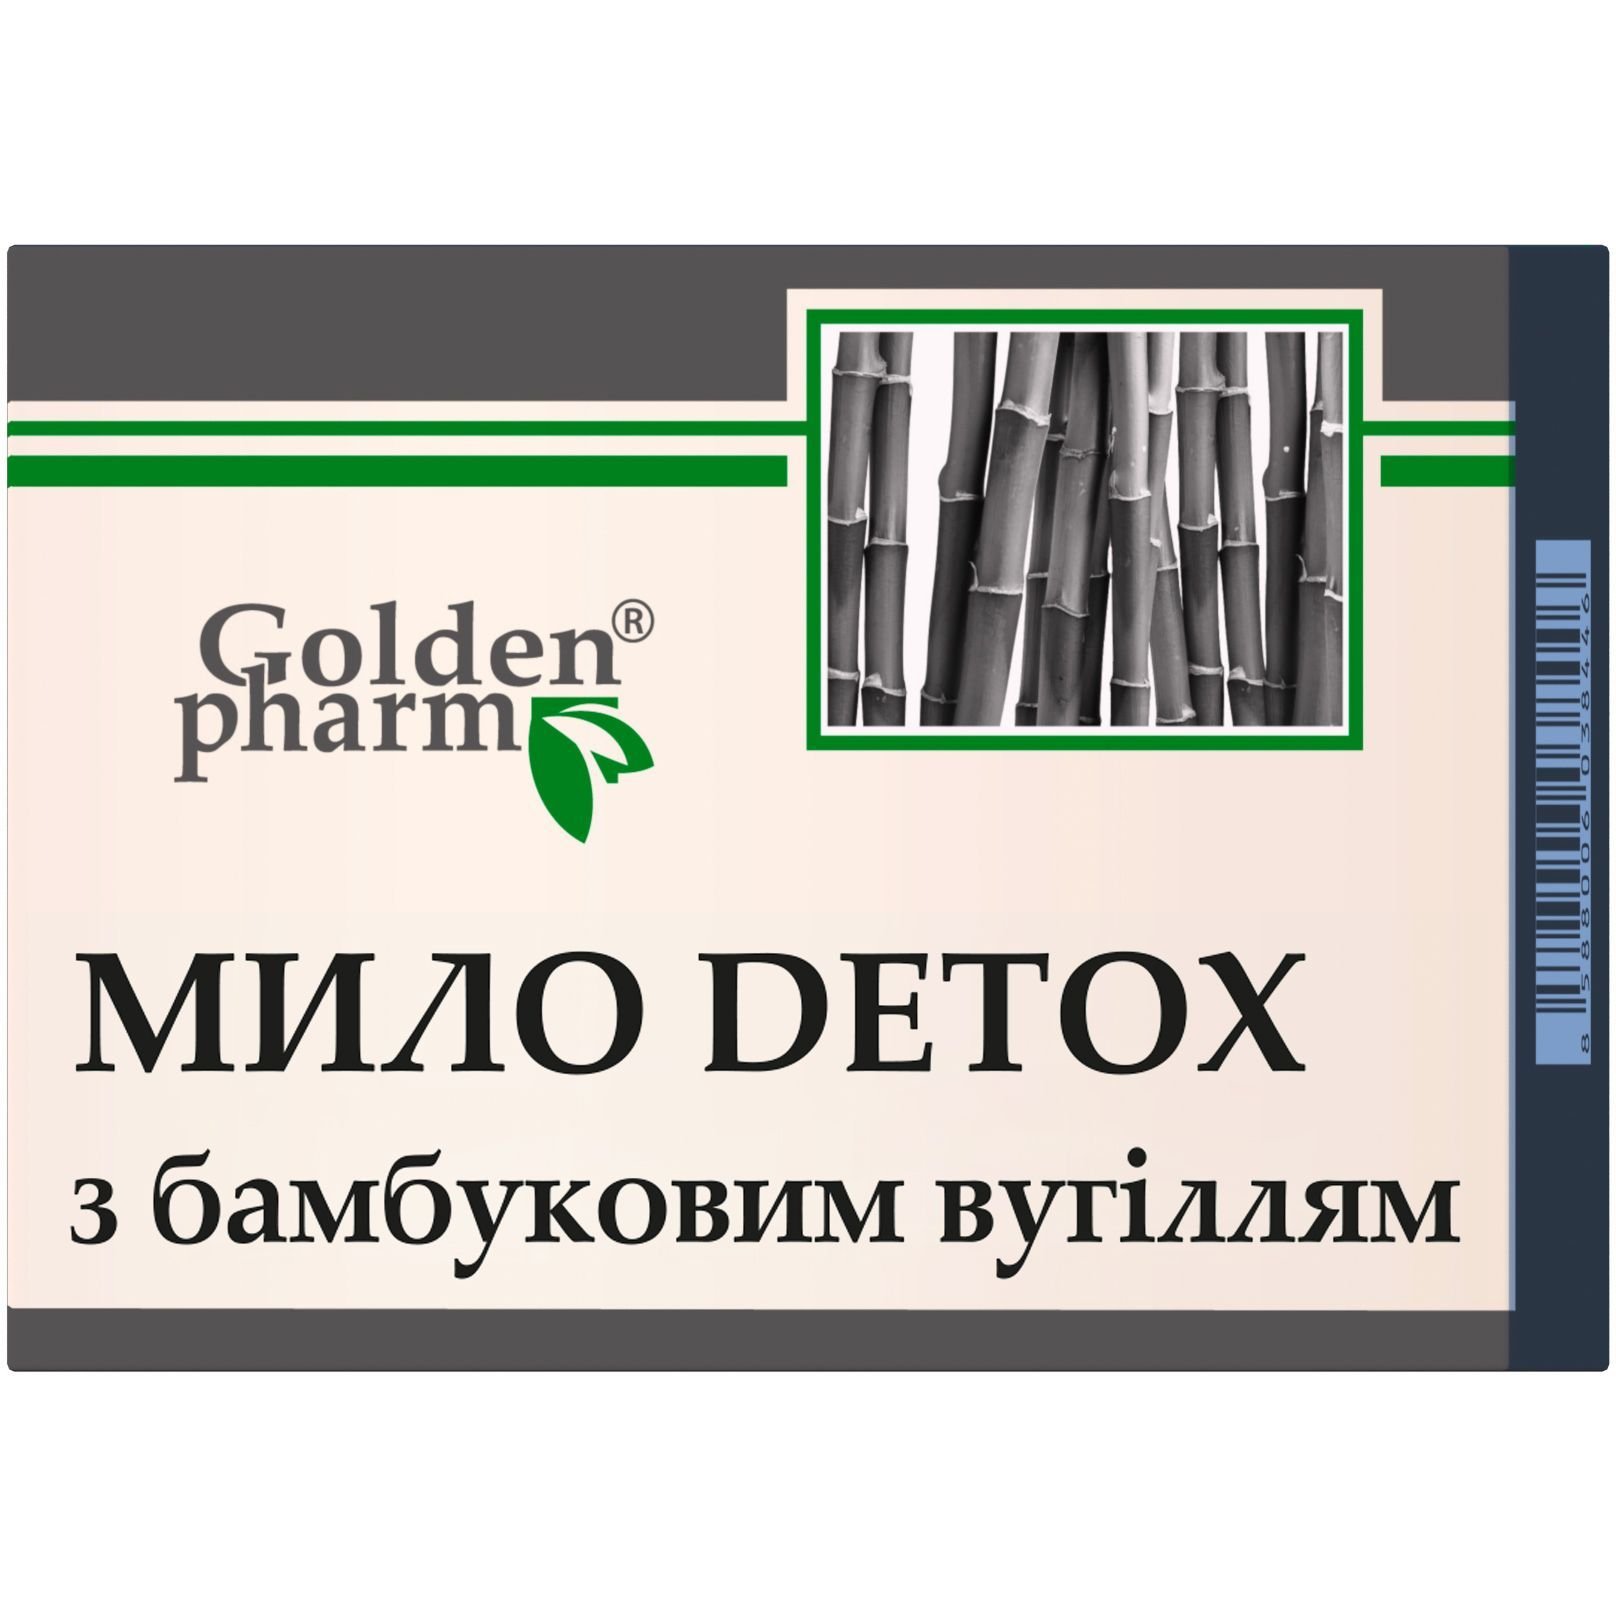 Мыло Golden Pharm Detox с бамбуковым углем, 70 г - фото 1